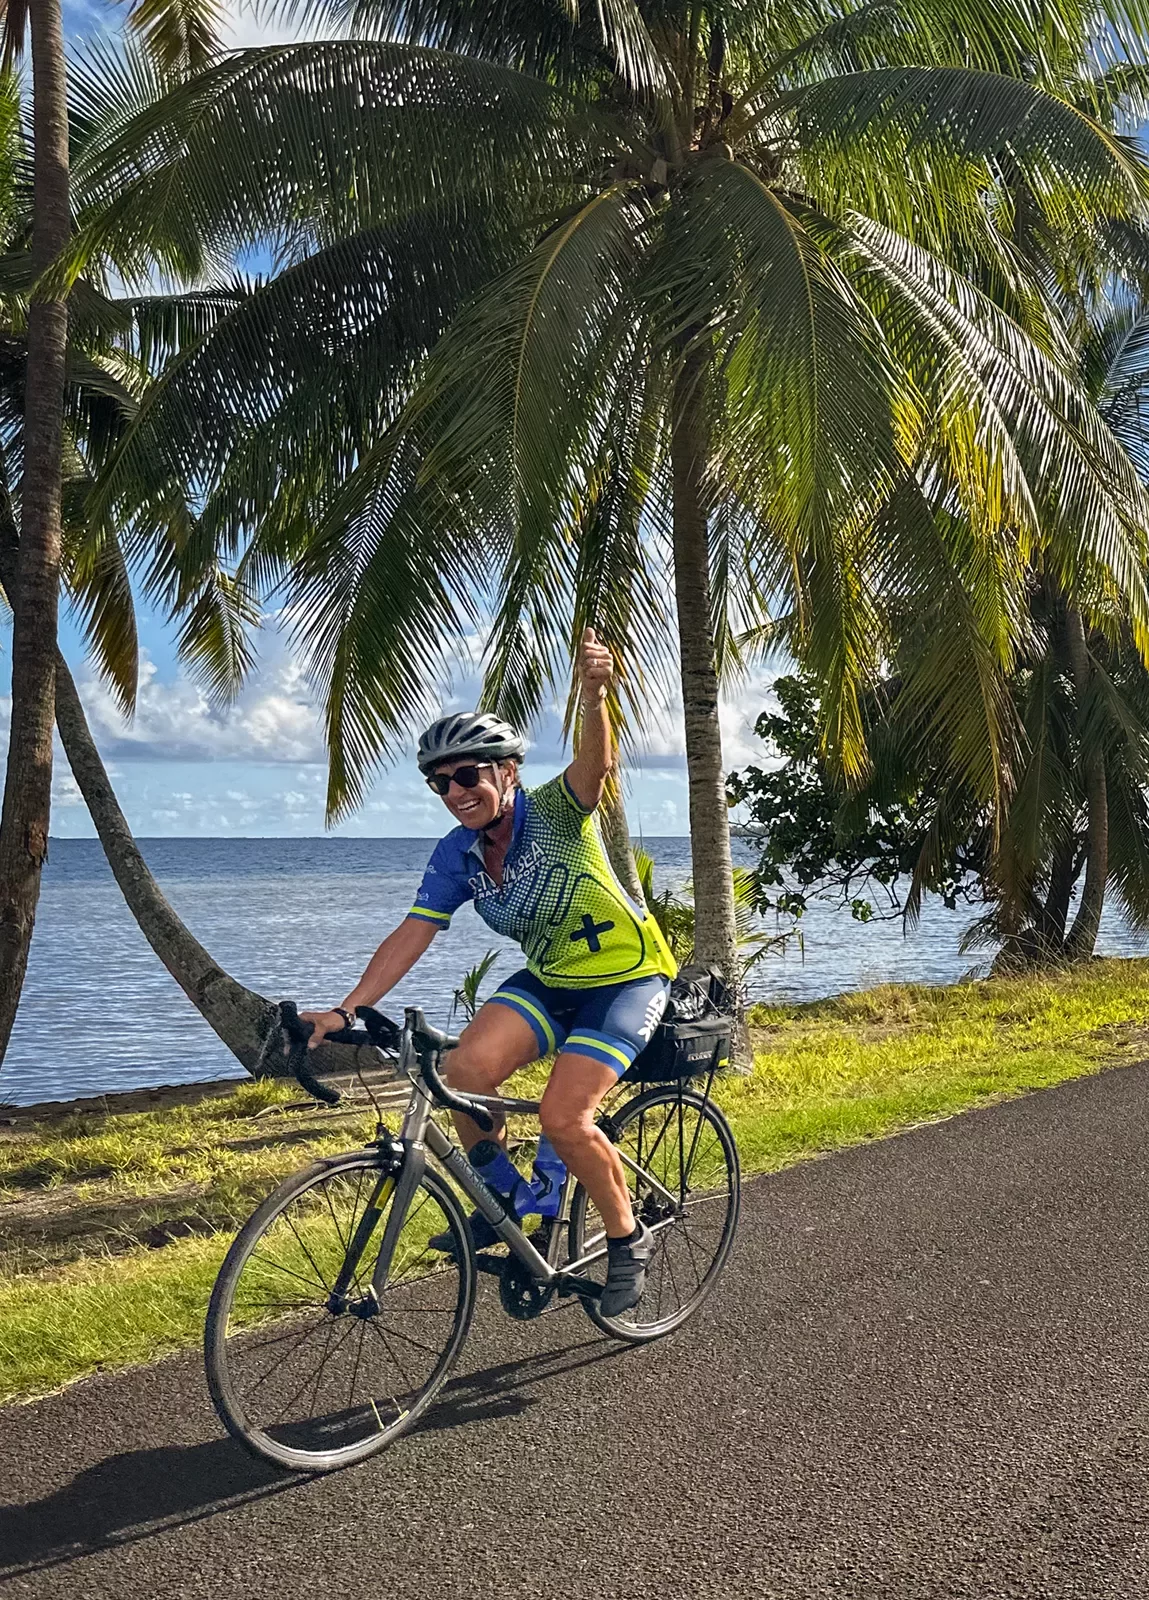 Biking along a palm tree lined shore in Tahiti